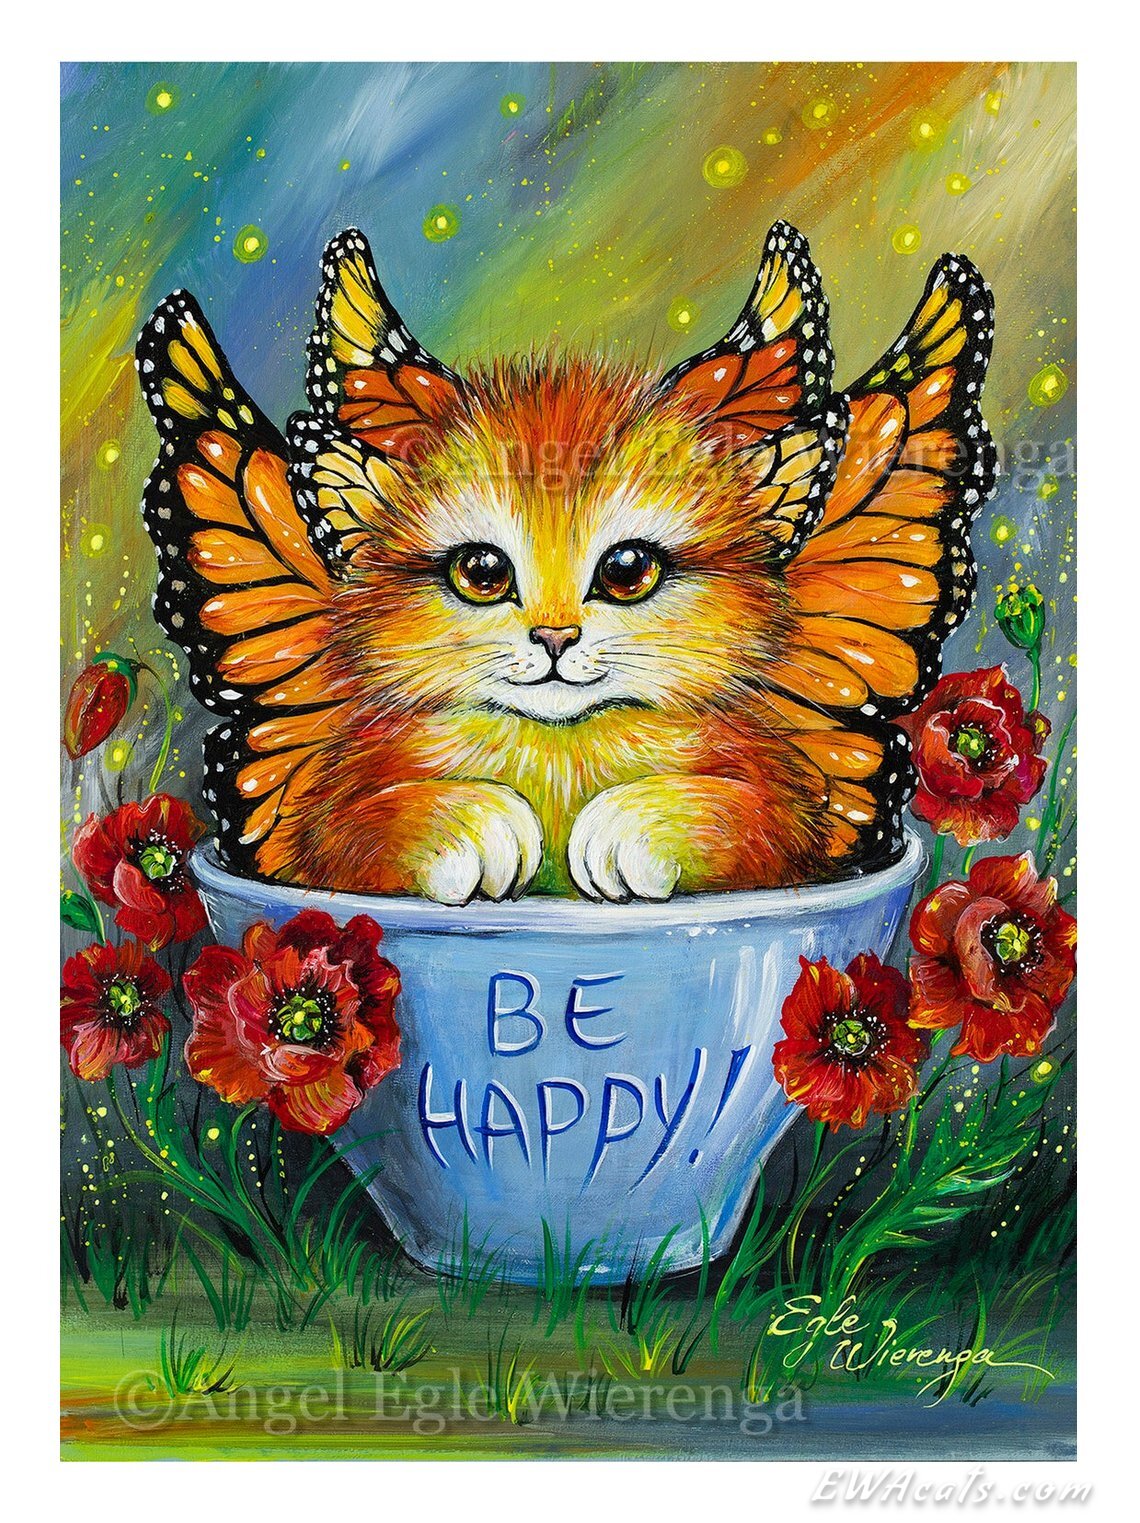 Art Print "Be Happy!"